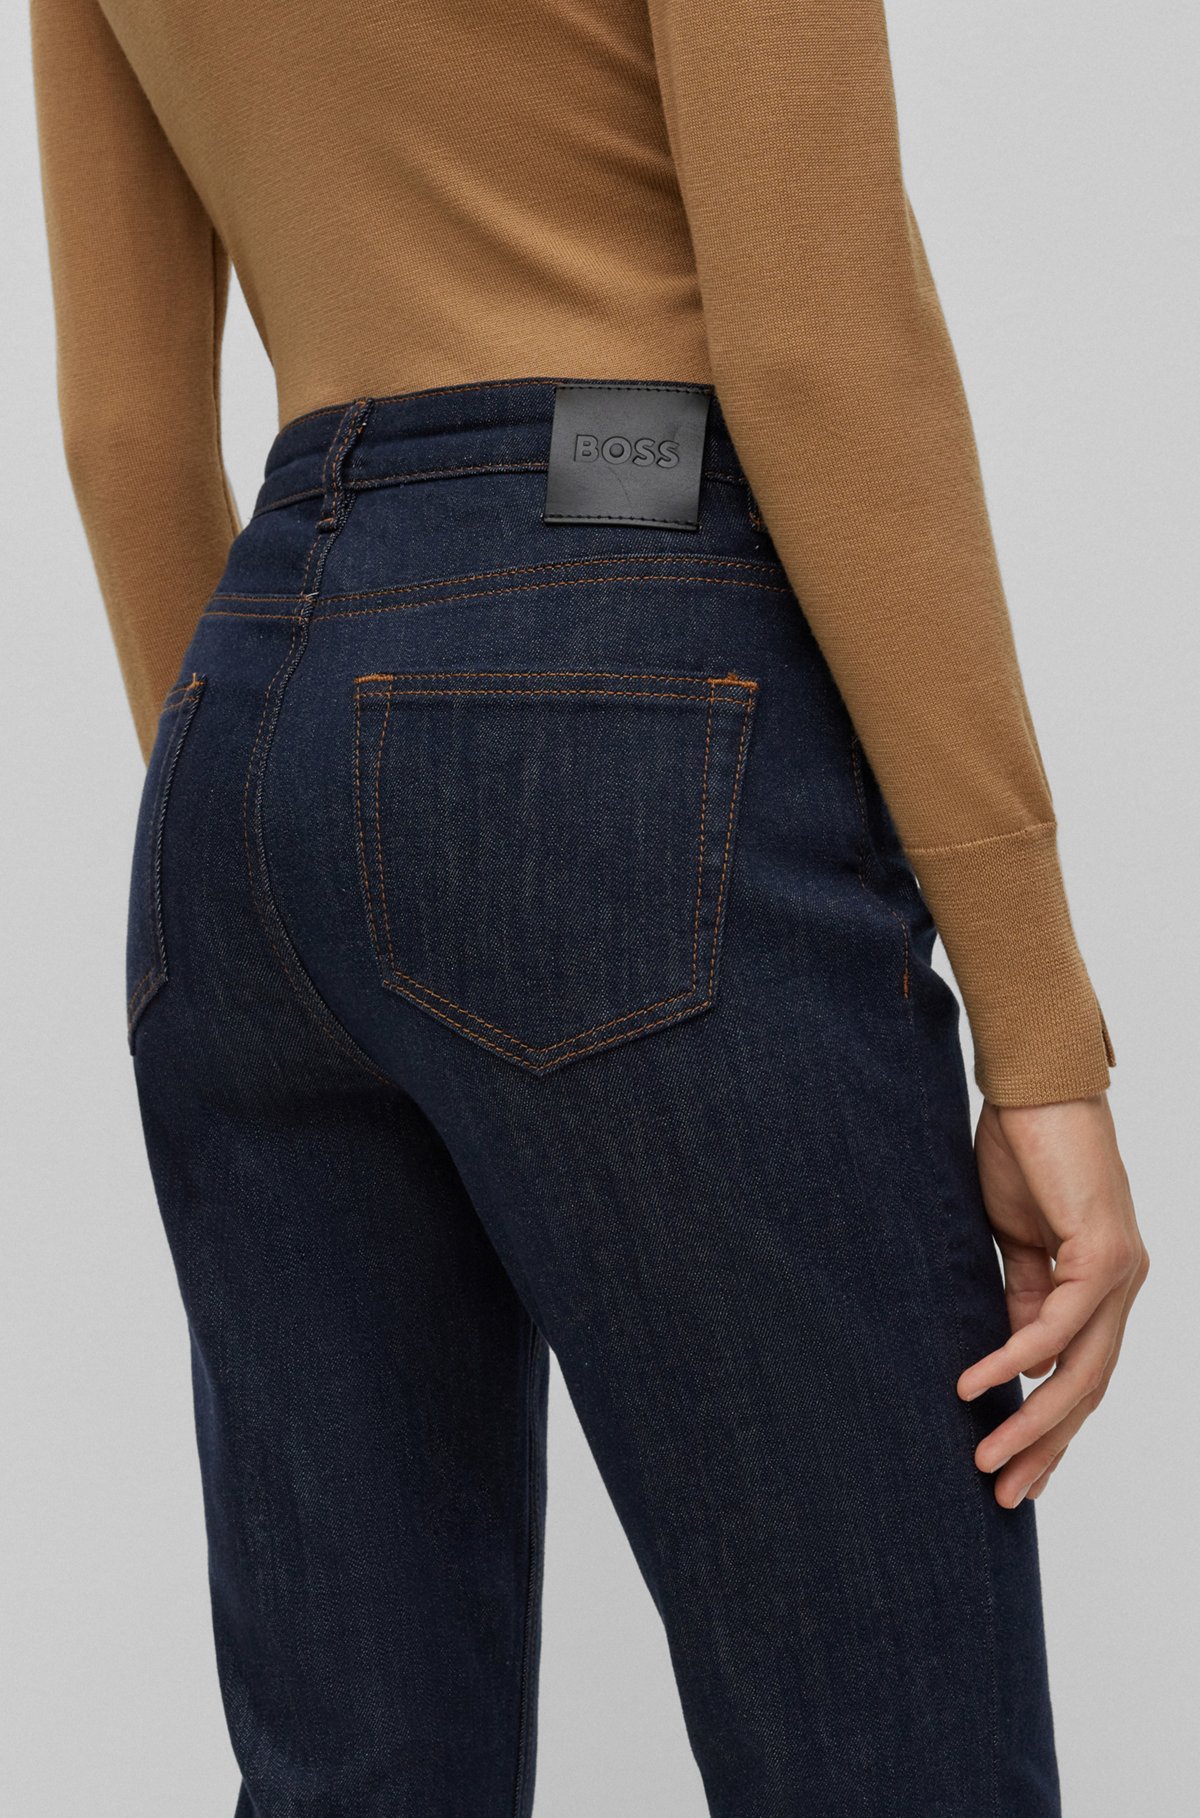 Slim-fit cropped jeans in Stay Indigo stretch denim, Dark Blue